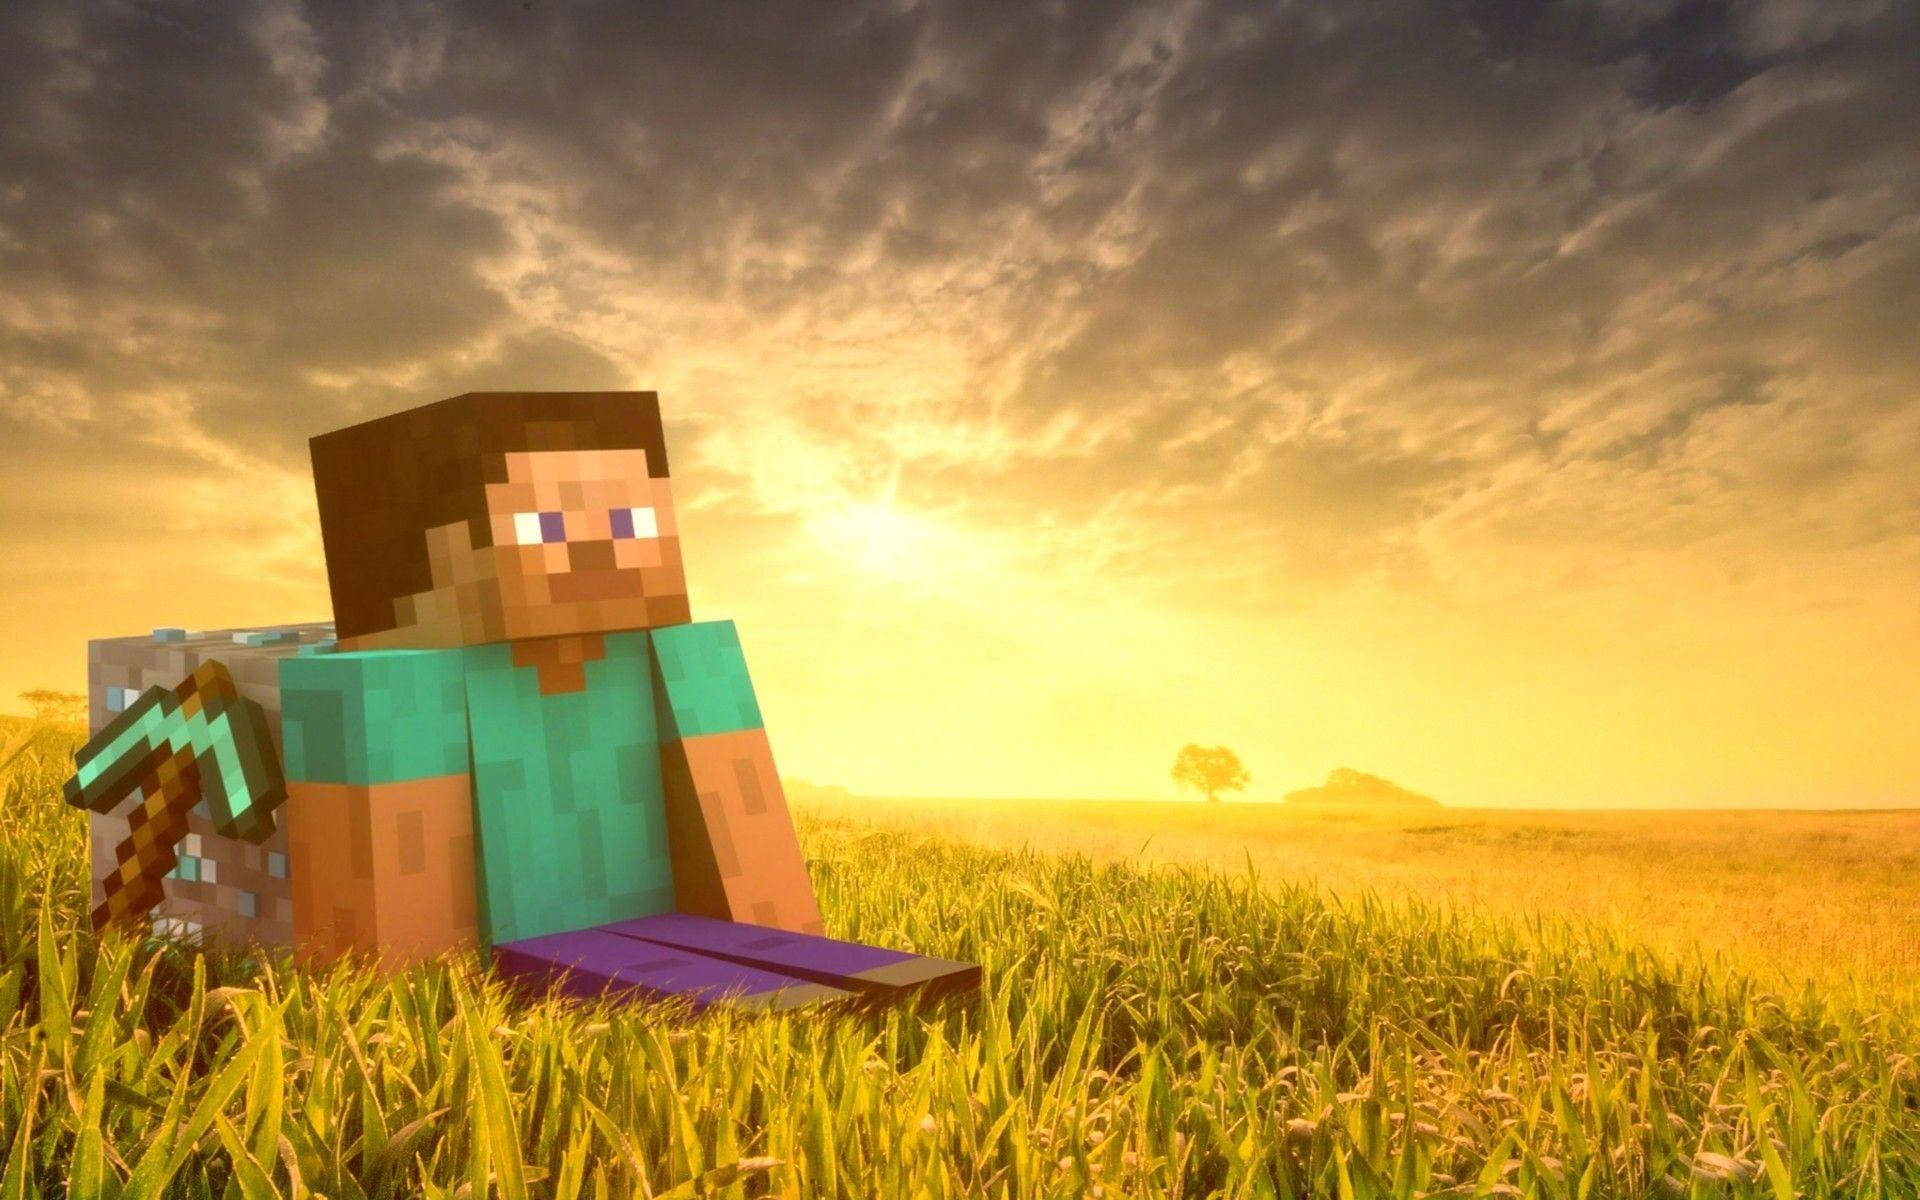 Minecraft Steve In Grass Field Hd Wallpaper